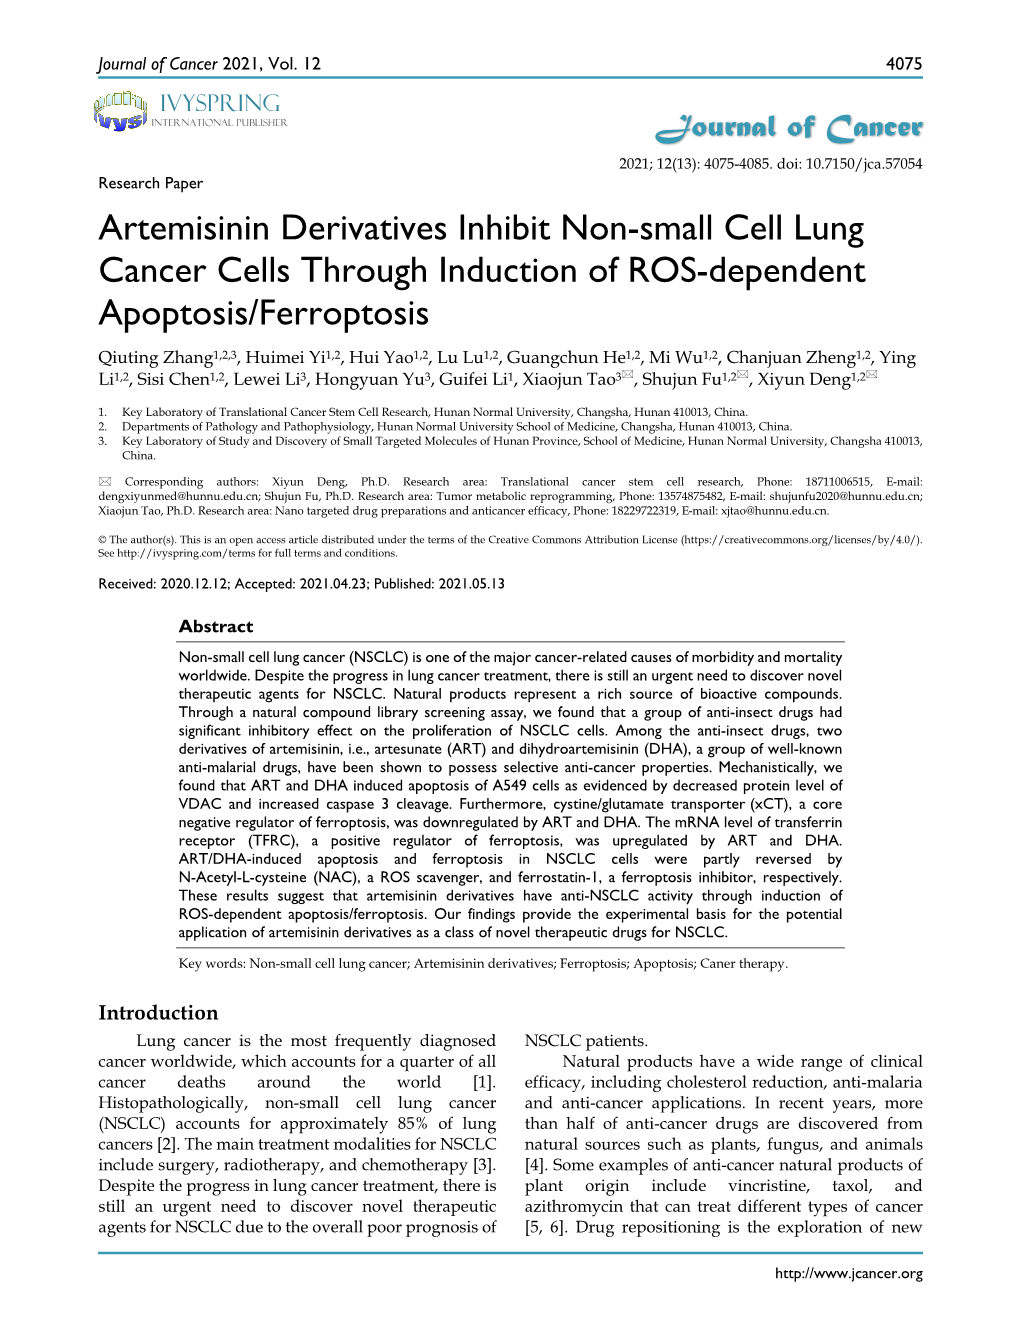 Artemisinin Derivatives Inhibit Non-Small Cell Lung Cancer Cells